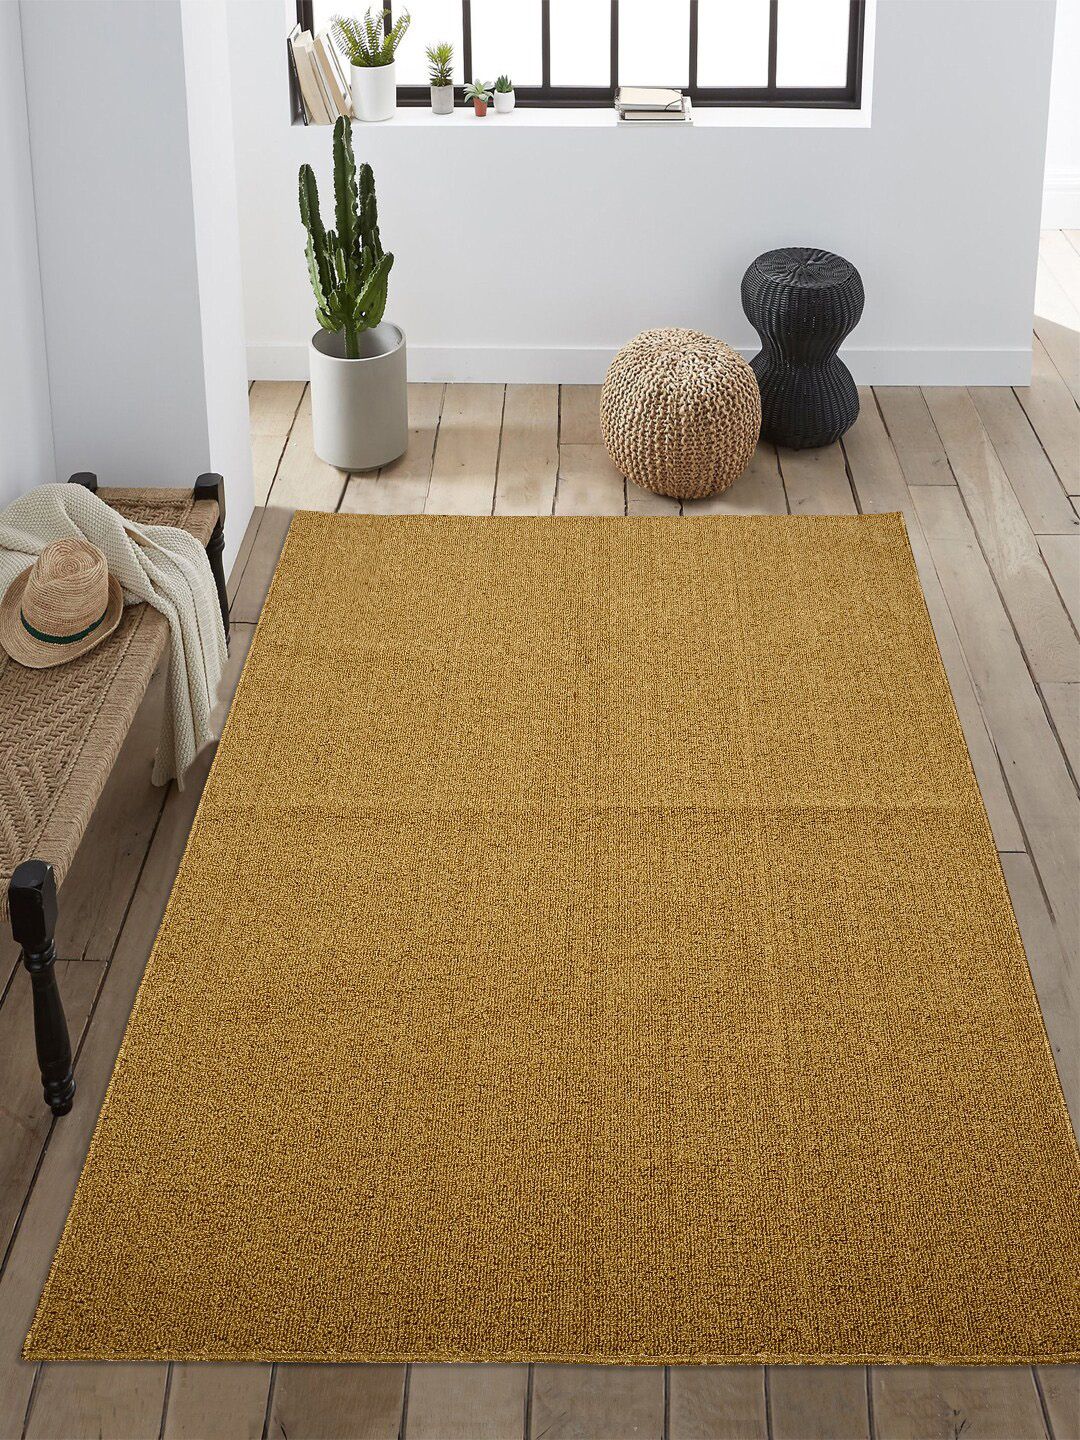 Saral Home Unisex Gold-Coloured Solid Anti-Skid Carpet Price in India